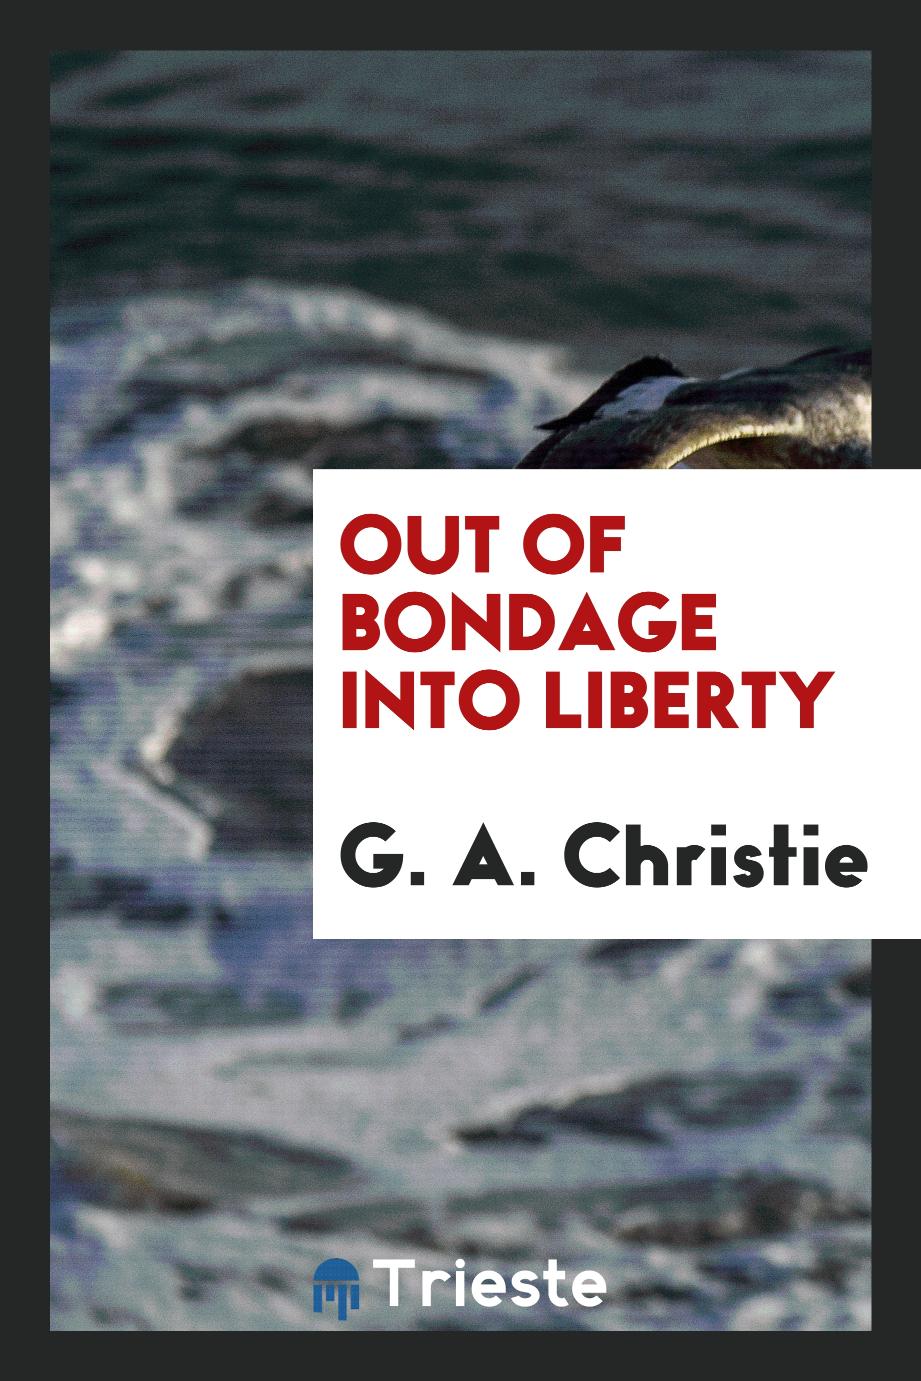 Out of bondage into liberty